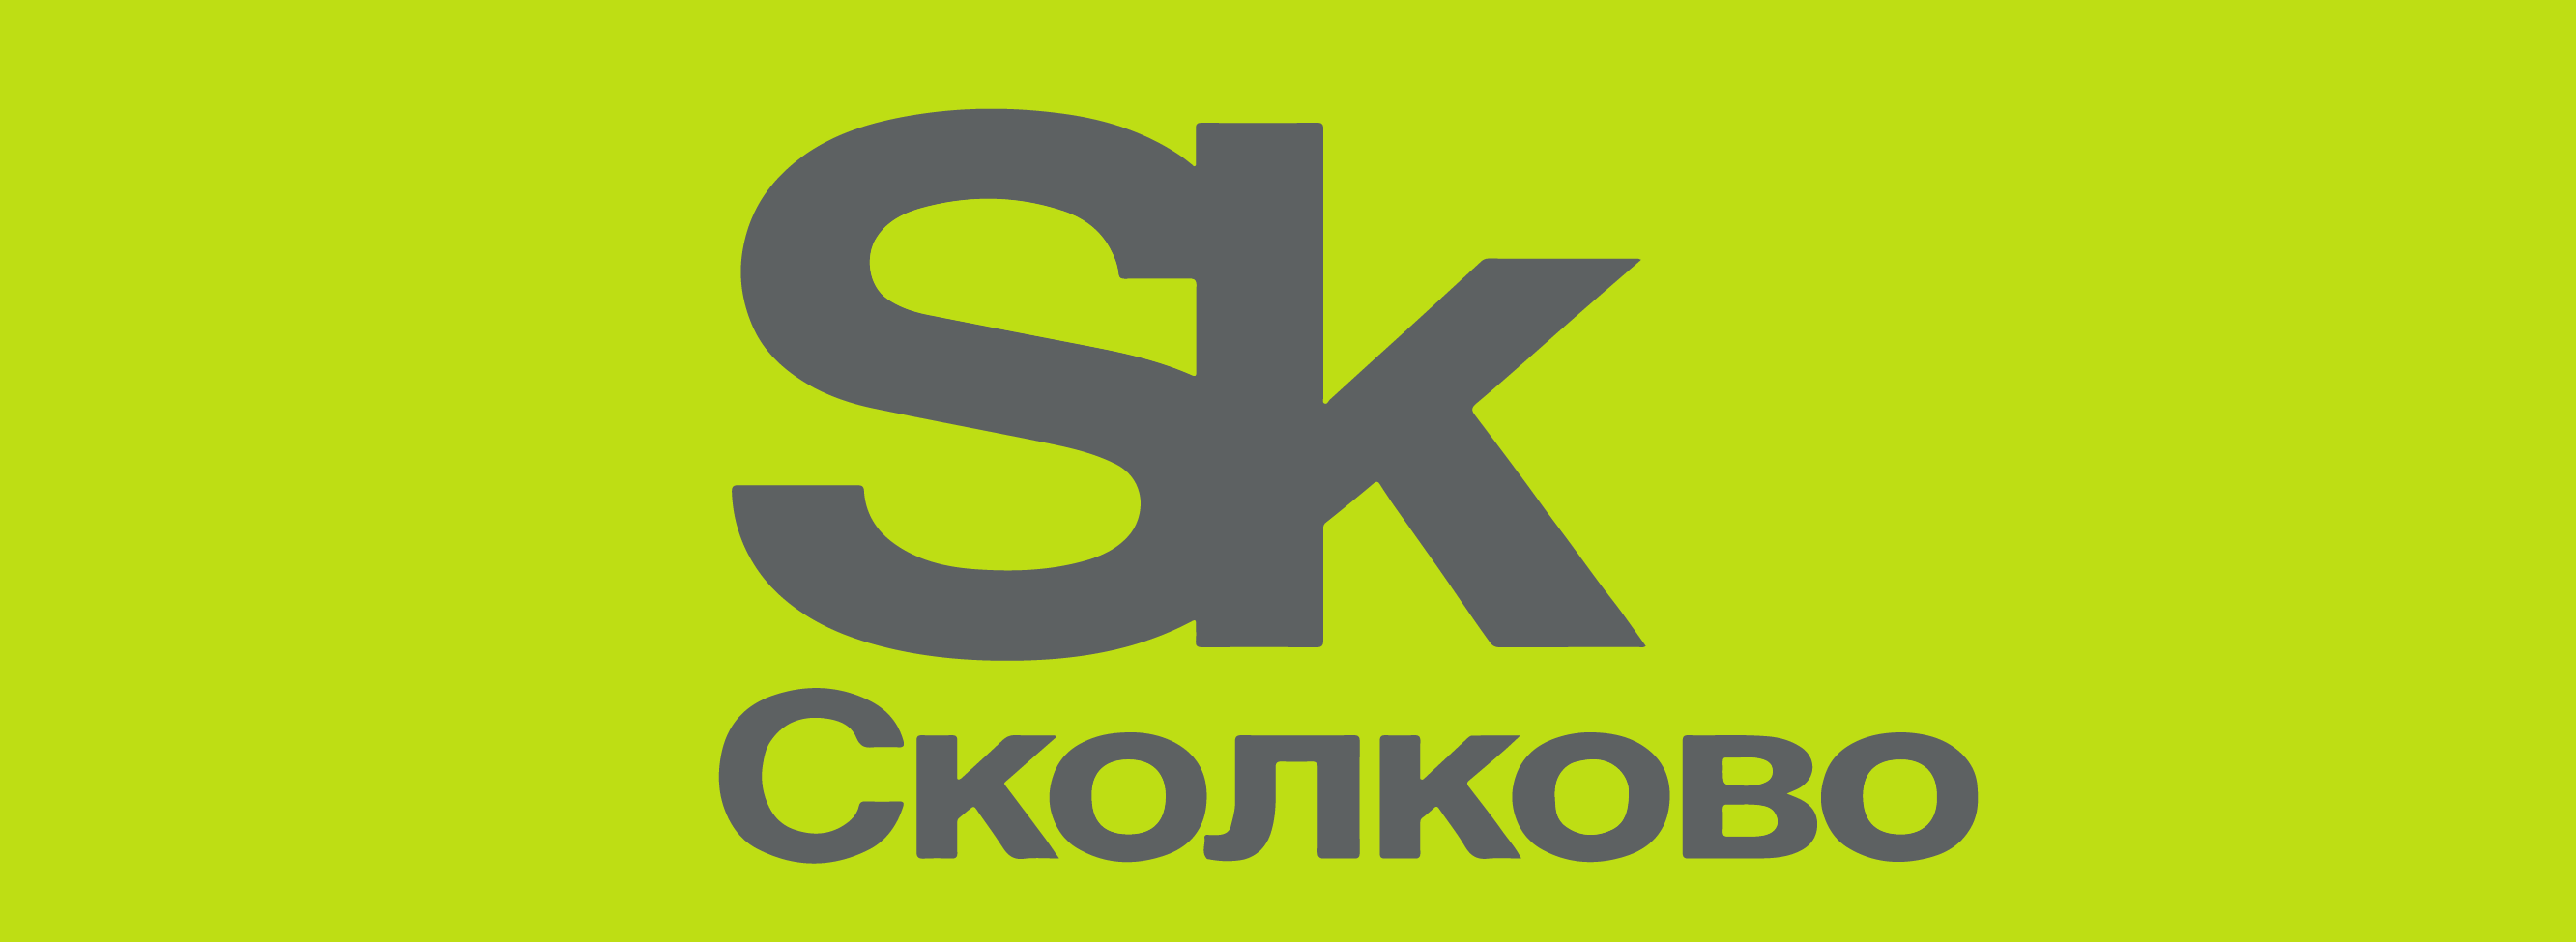 We are SKOLKOVO Residents!